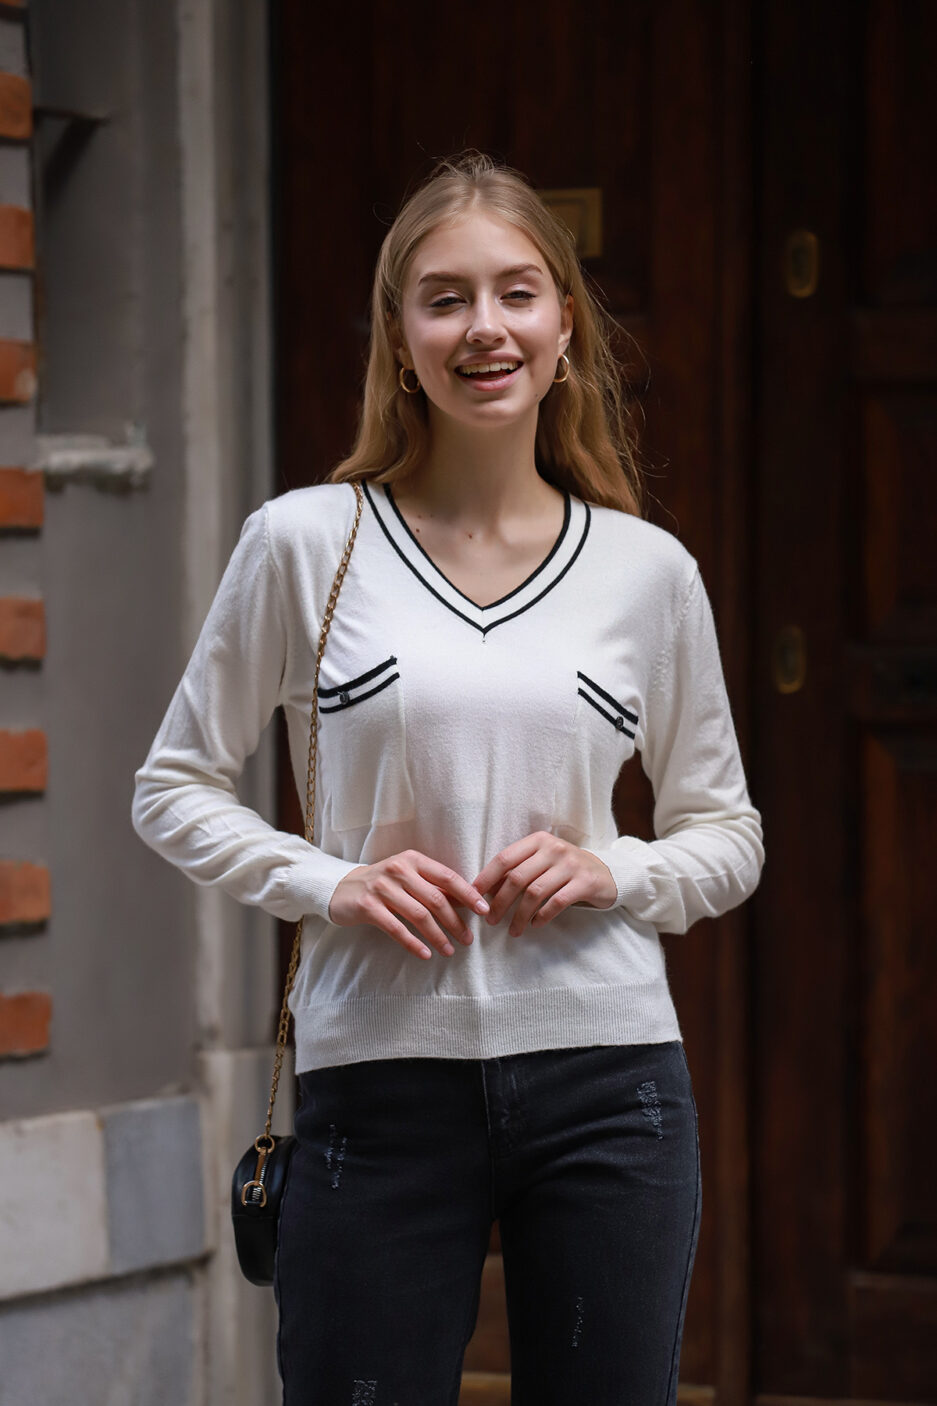 Women's Varsity-Striped Sweatshirt with Pocket